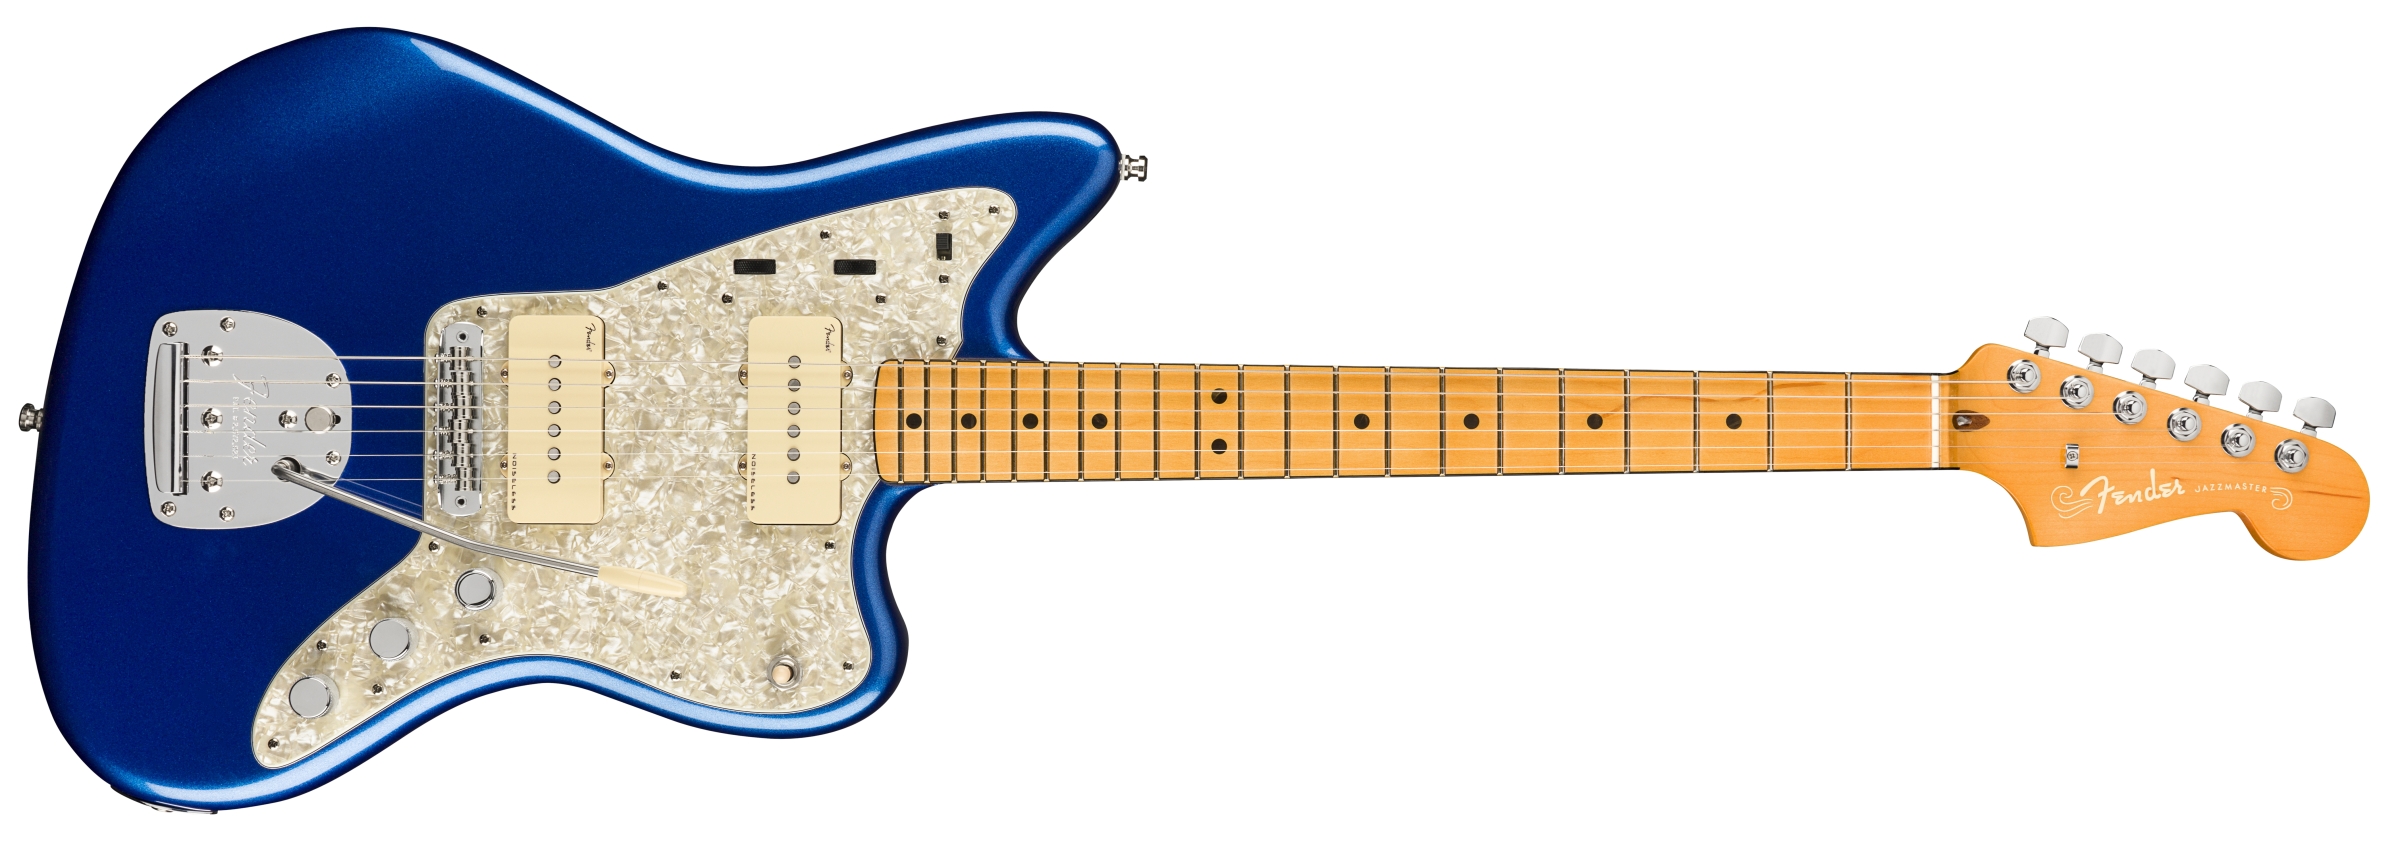 Fender品牌_电吉他_American Professional_0113060738 产品介绍 - FAST发时达乐器